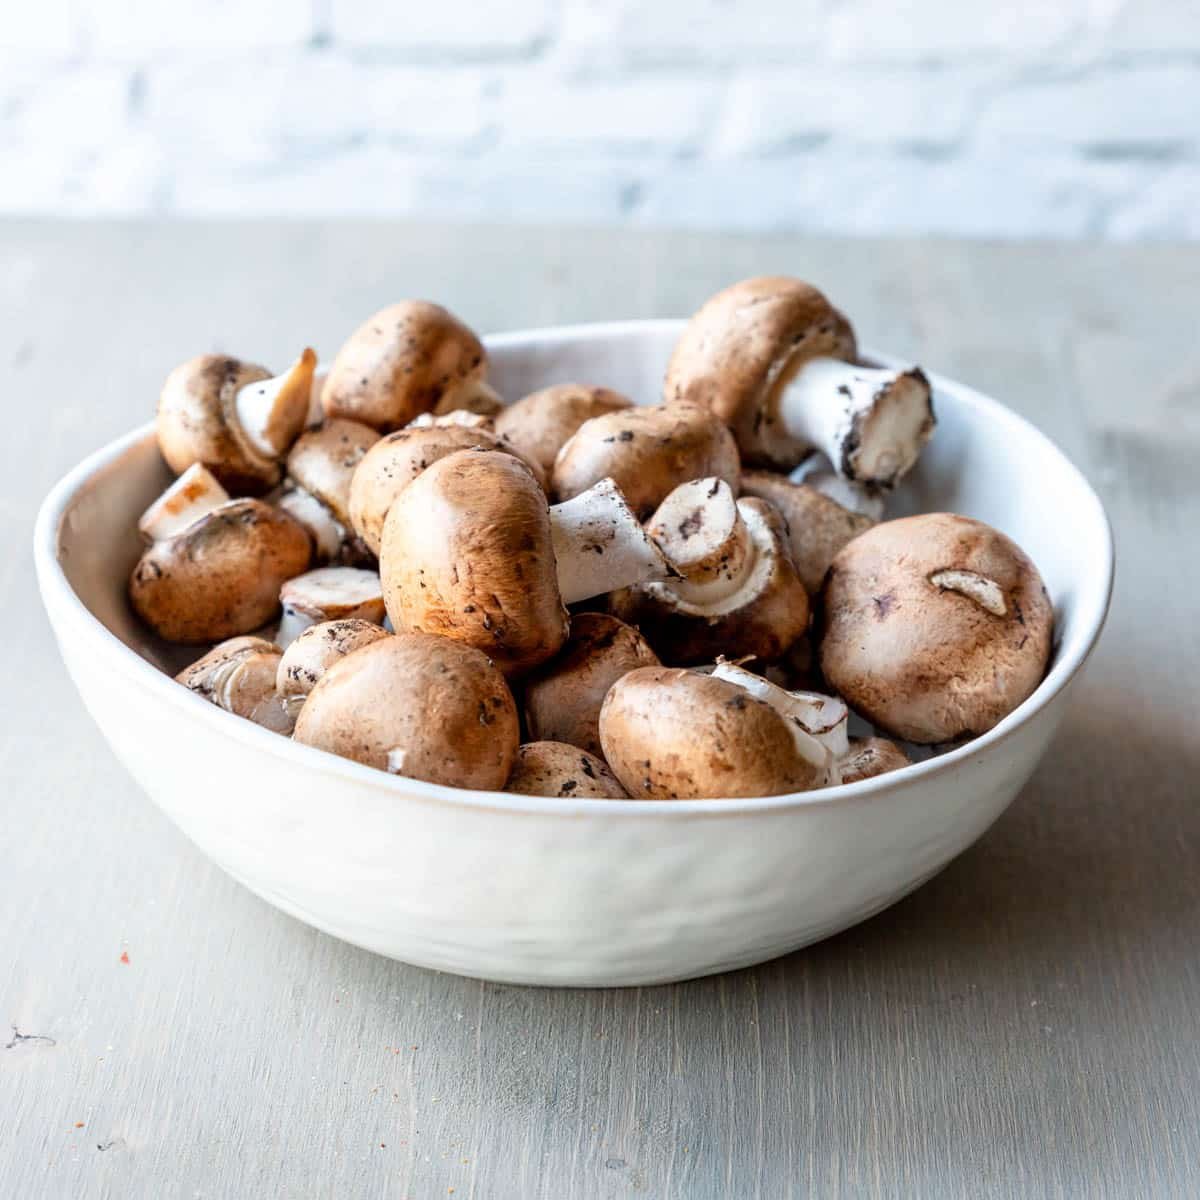 A bowl of baby bella mushrooms